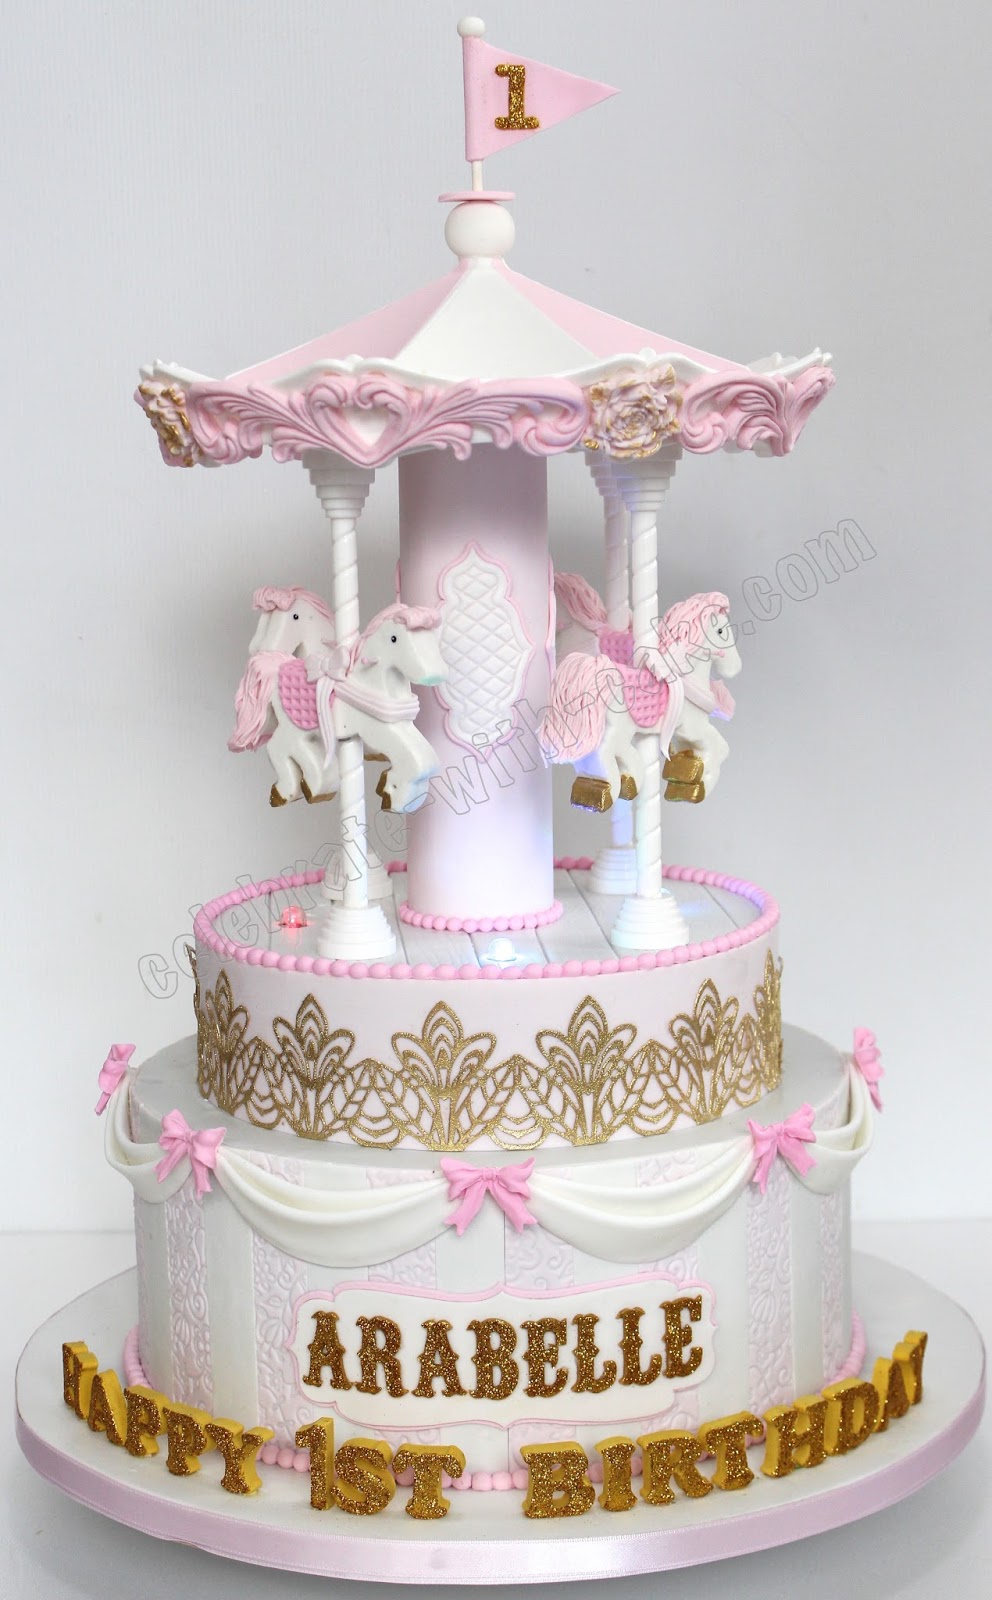 Celebrate with Cake!: Carousel 1st Birthday